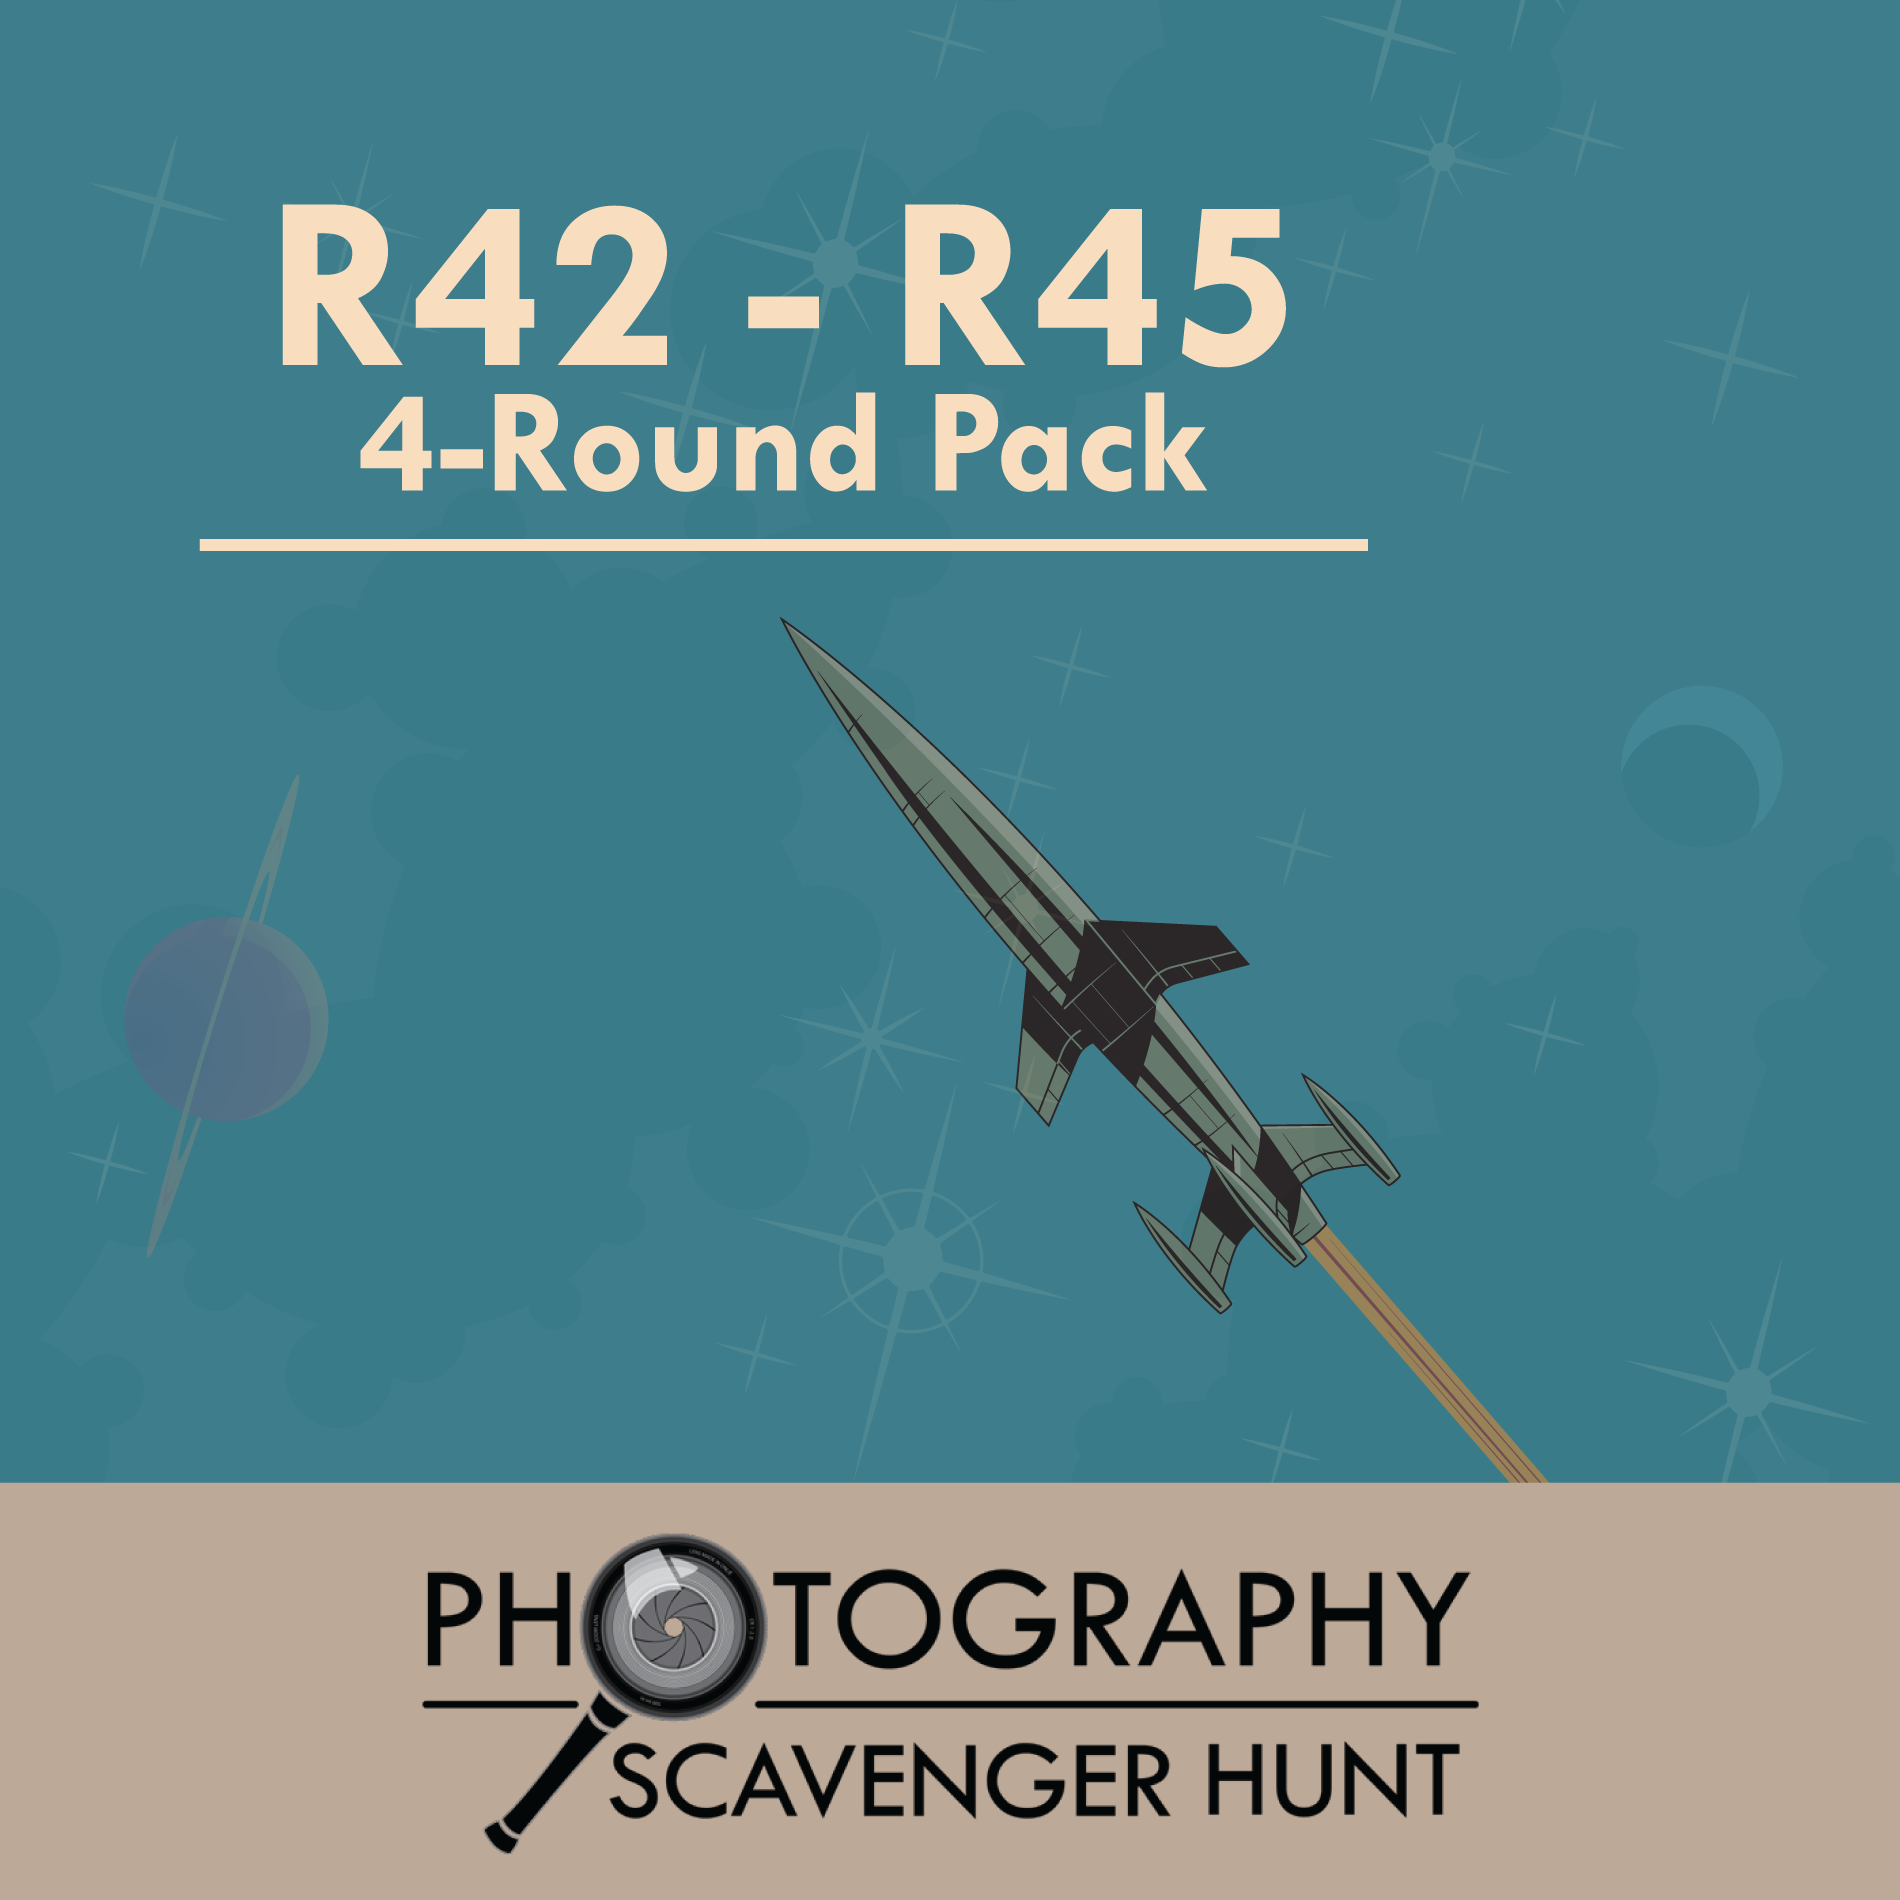 Round 40 Photography Scavenger Hunt